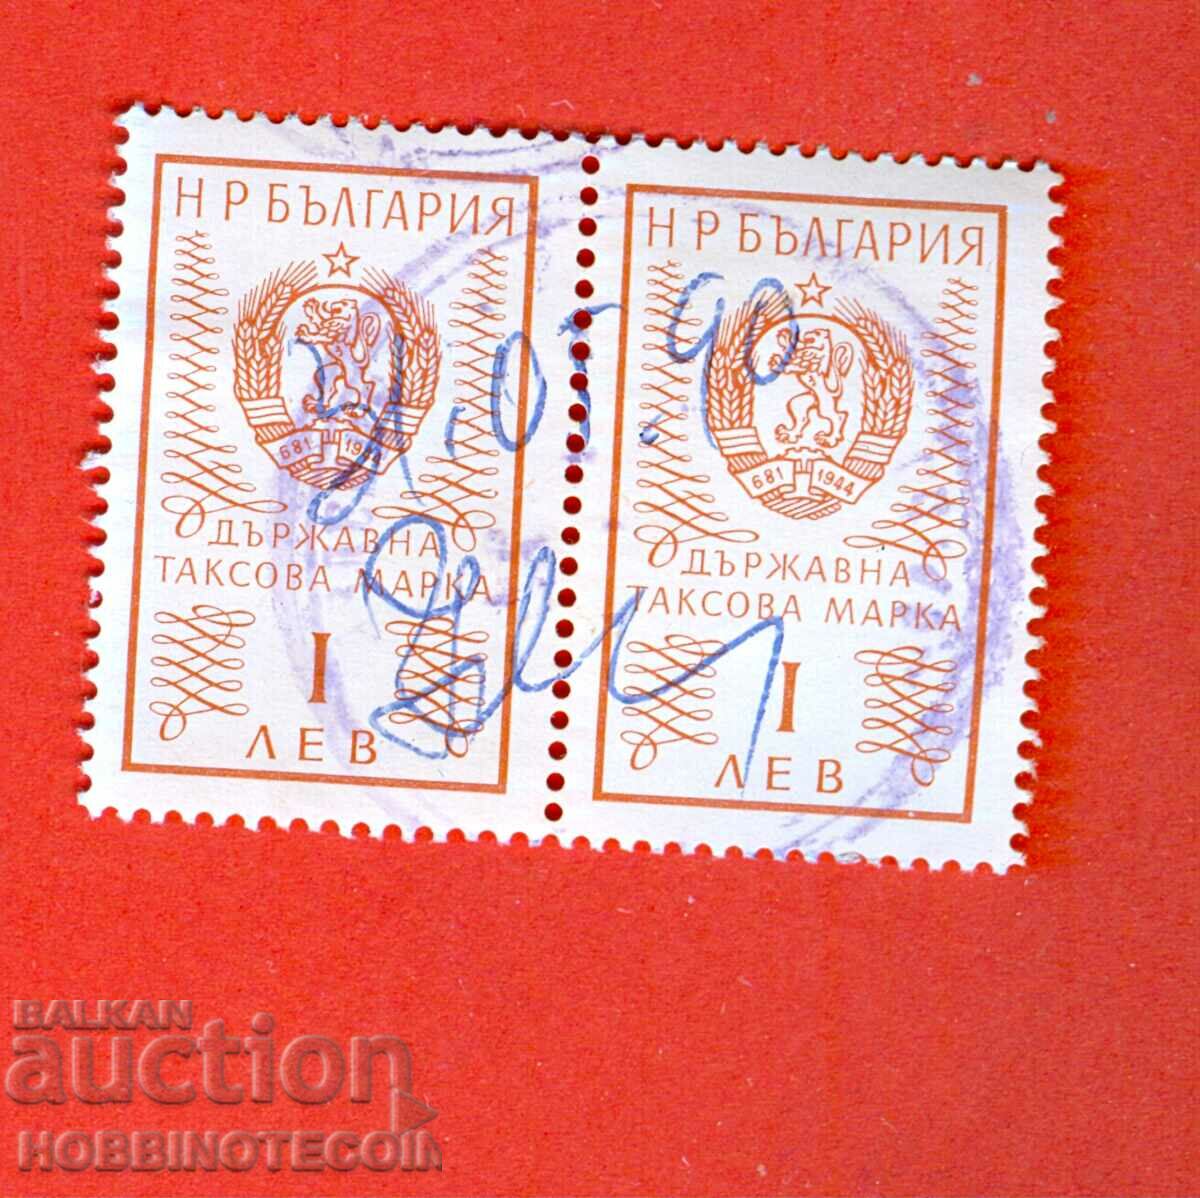 NR BULGARIA STATE TAX STAMP 2 x 1,00 - 1 Lev - 1972